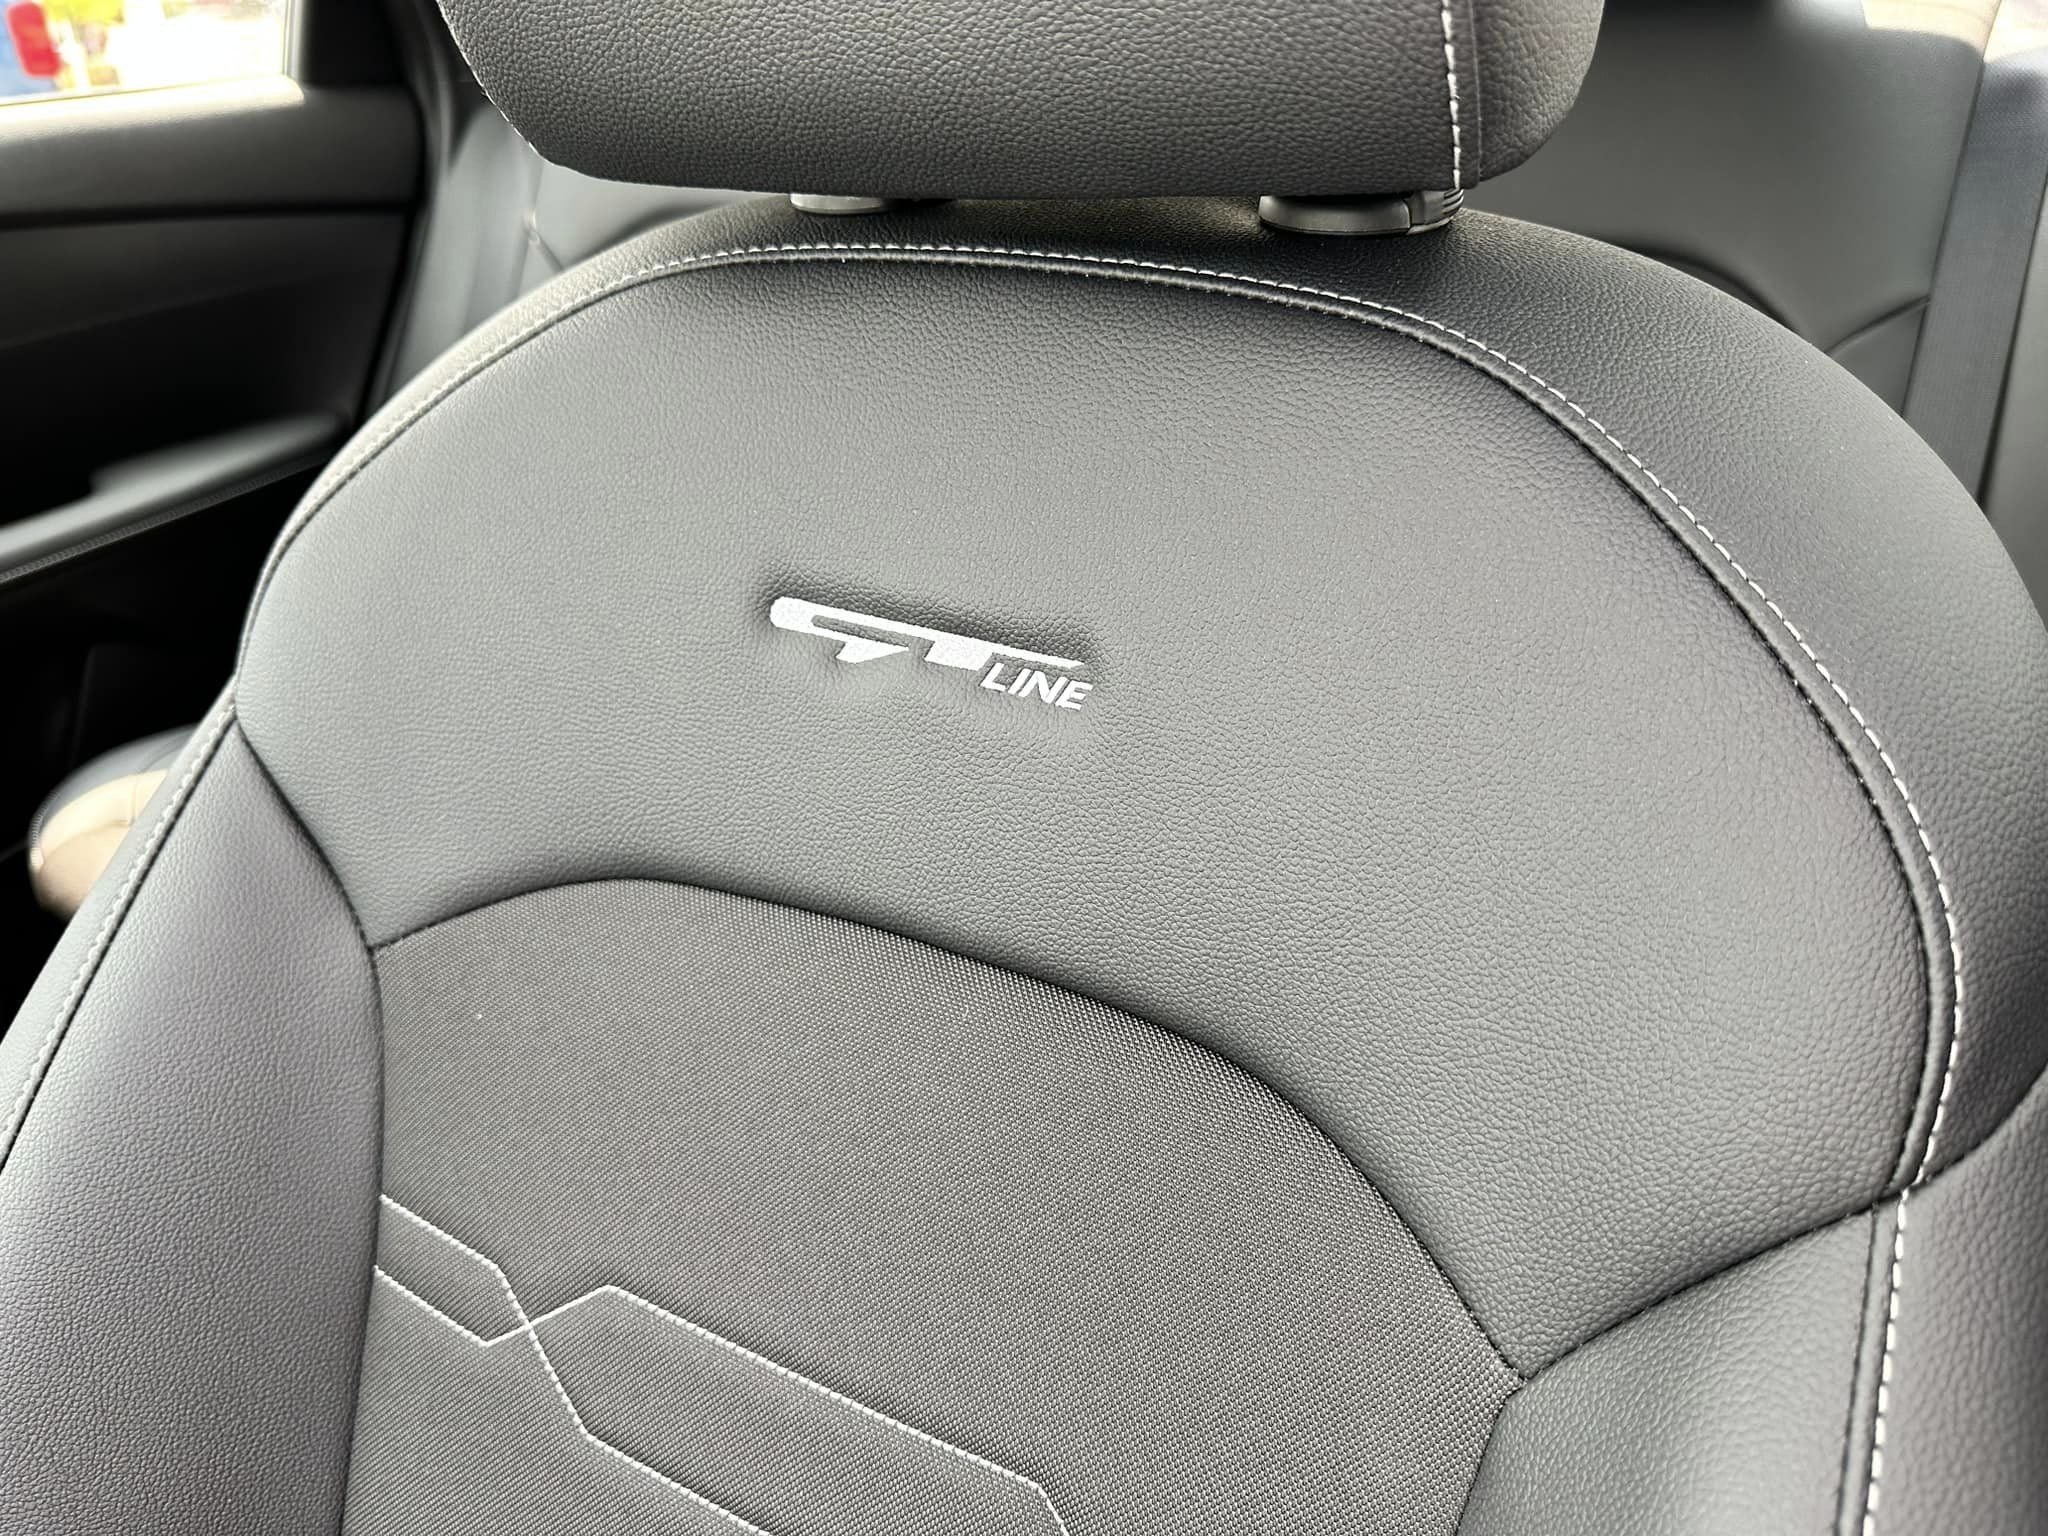 2023 Kia Forte -  Aurora Black - GT-Line Trim - Close Up Seat Embroidered